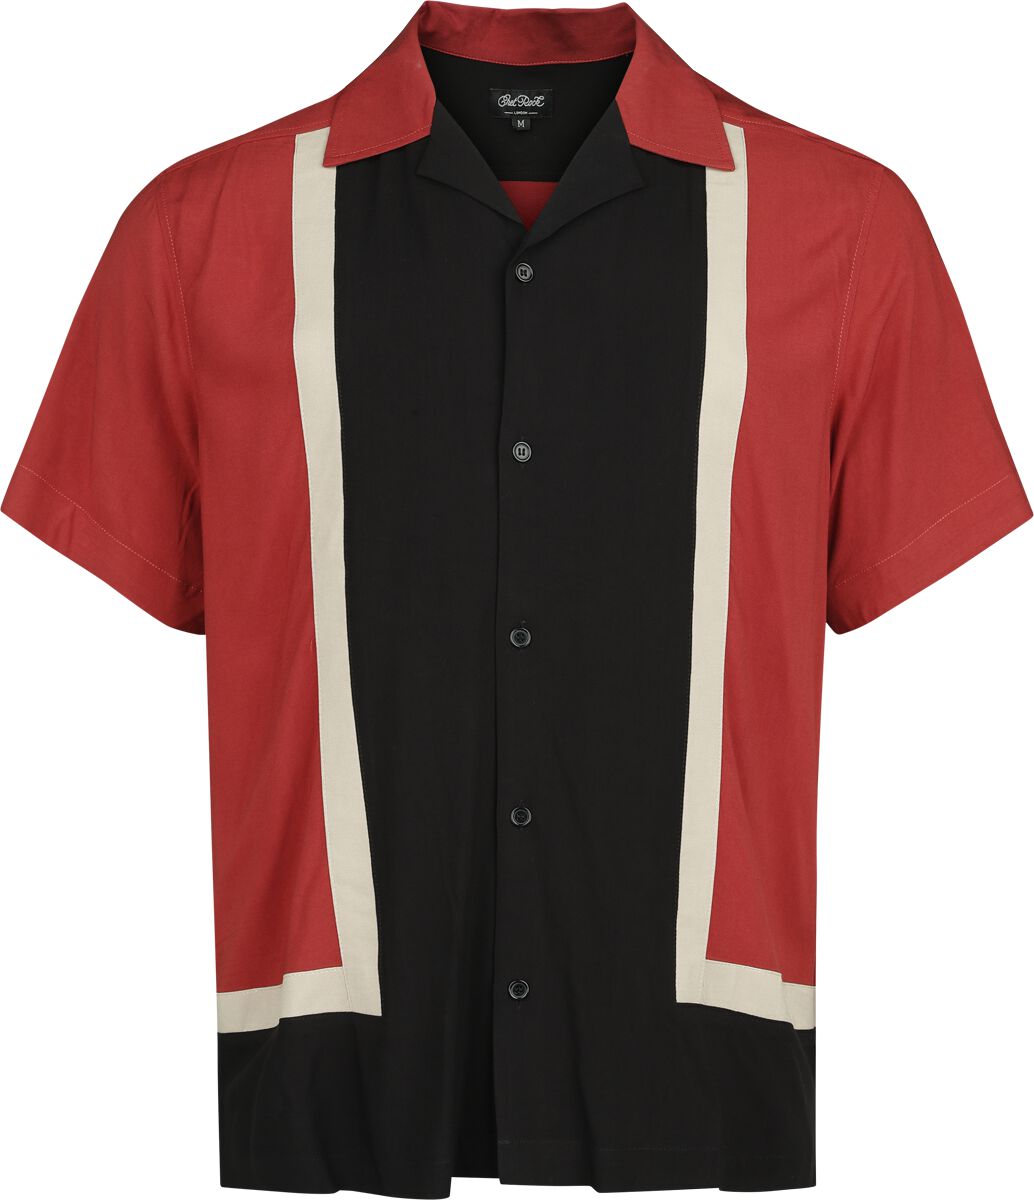 Chet Rock - Rockabilly Kurzarmhemd - Walter Bowling Shirt - S bis XL - für Männer - Größe M - rot/schwarz